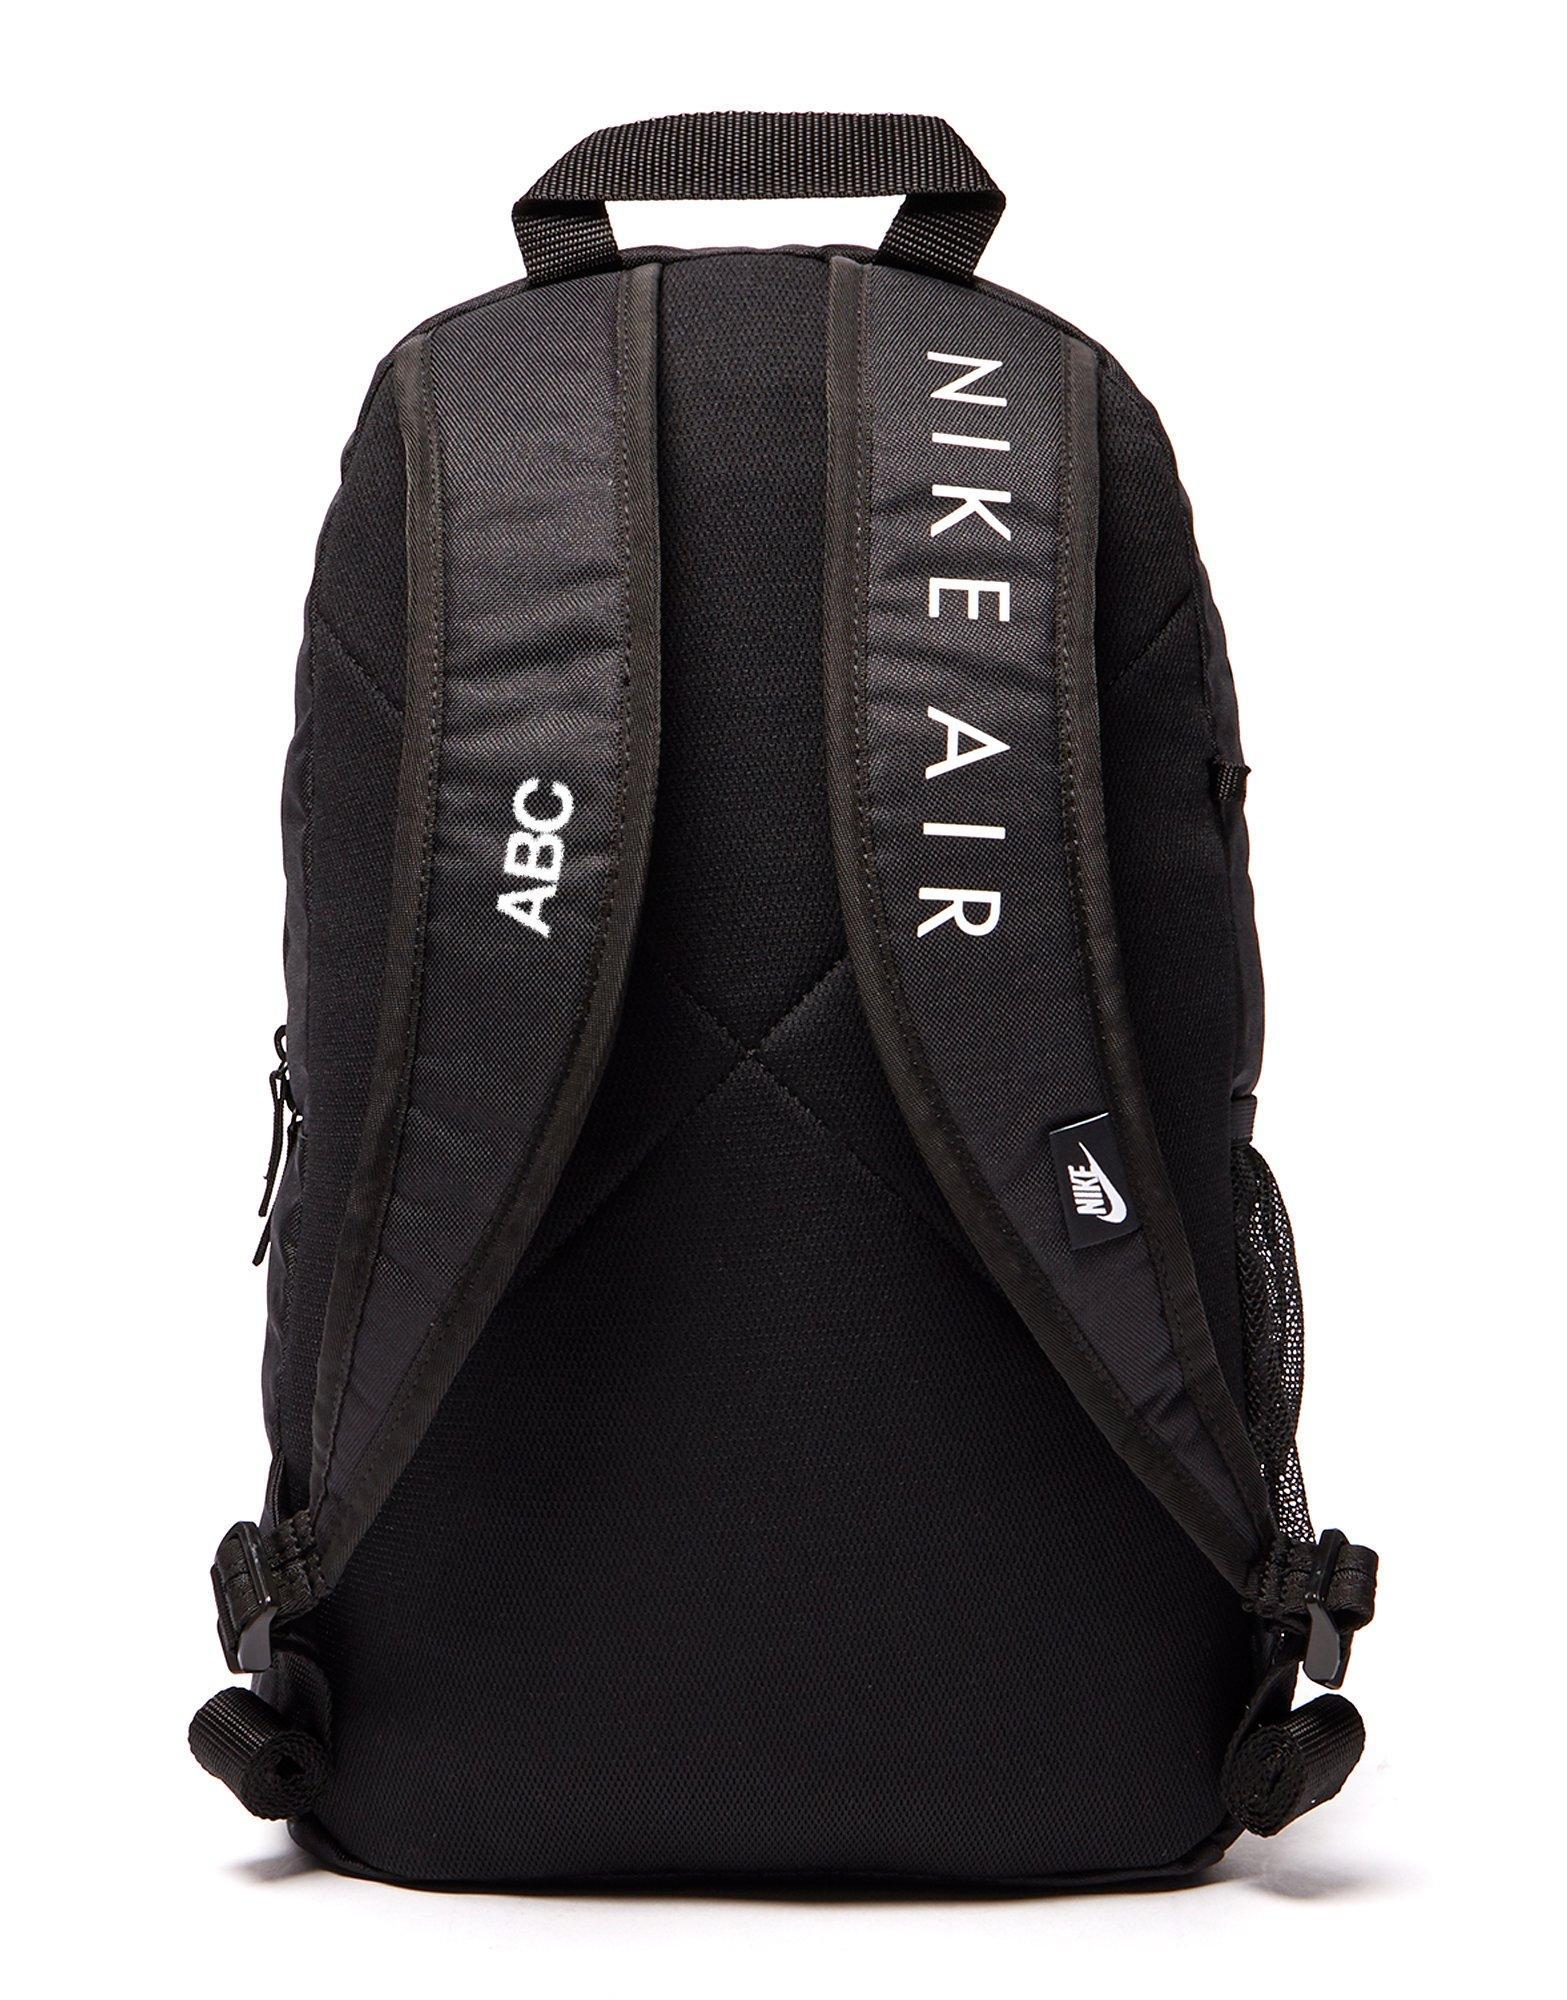 Nike Synthetic Elemental Backpack in Black/Grey (Black) for Men - Lyst